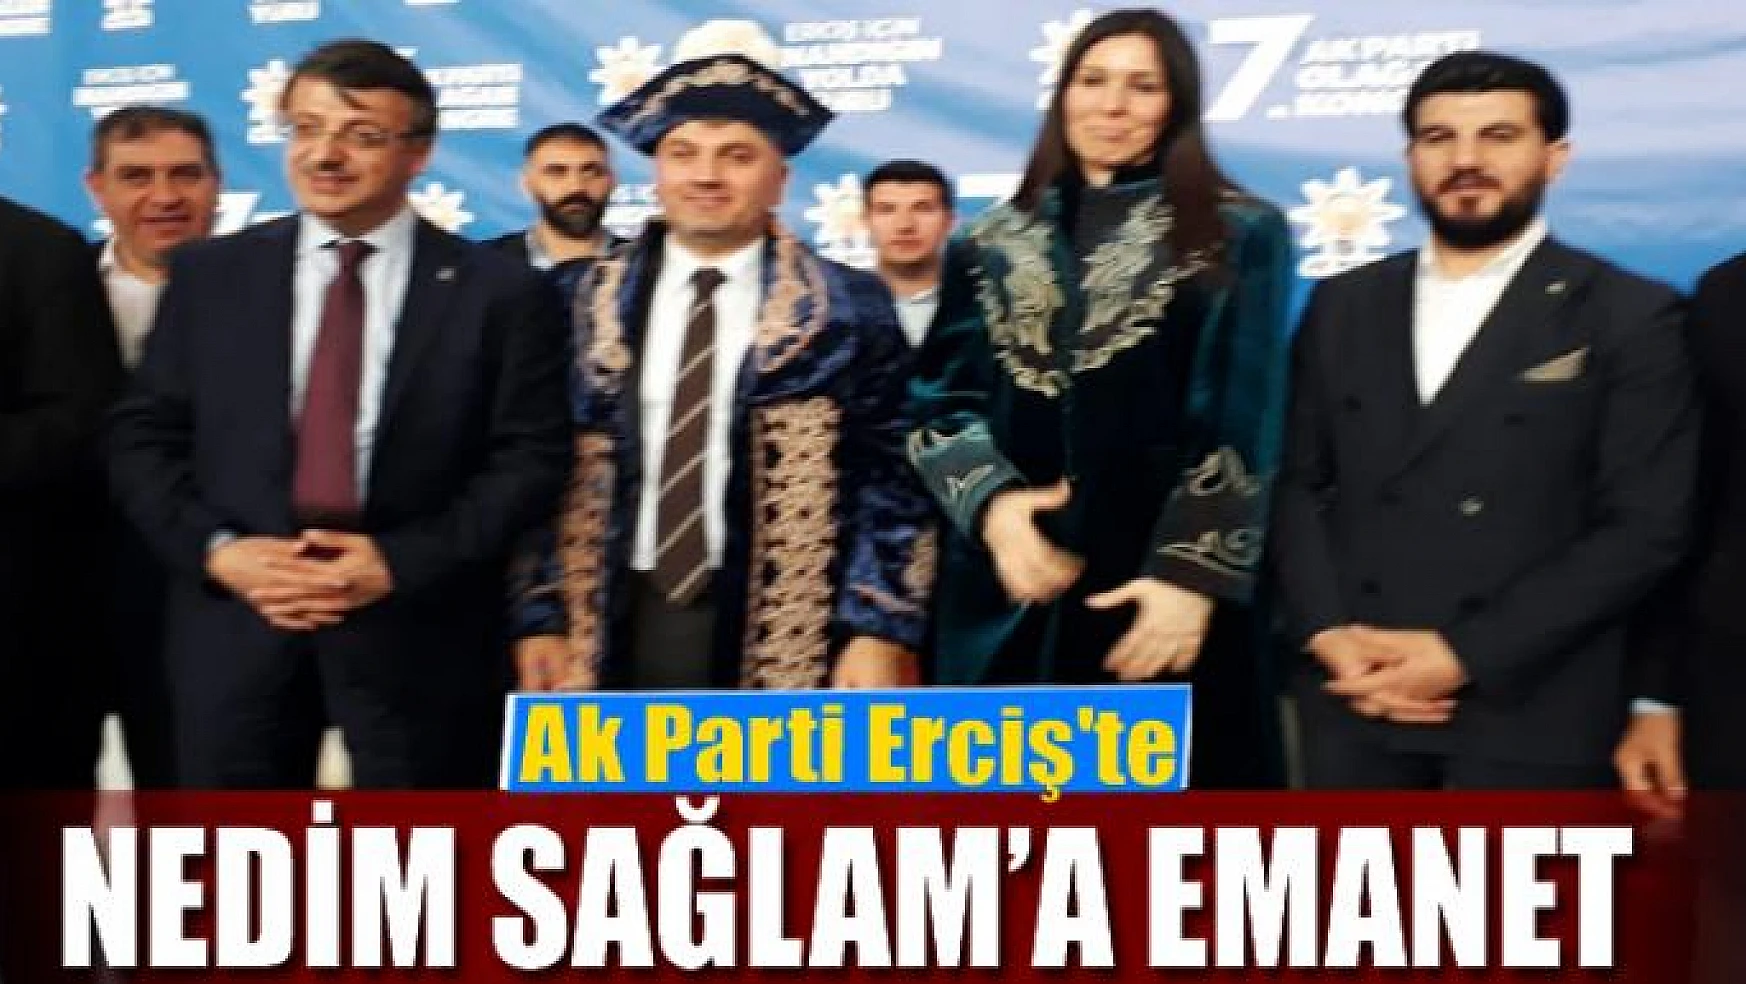 Ak Parti Erciş'te Nedim Sağlam'a emanet